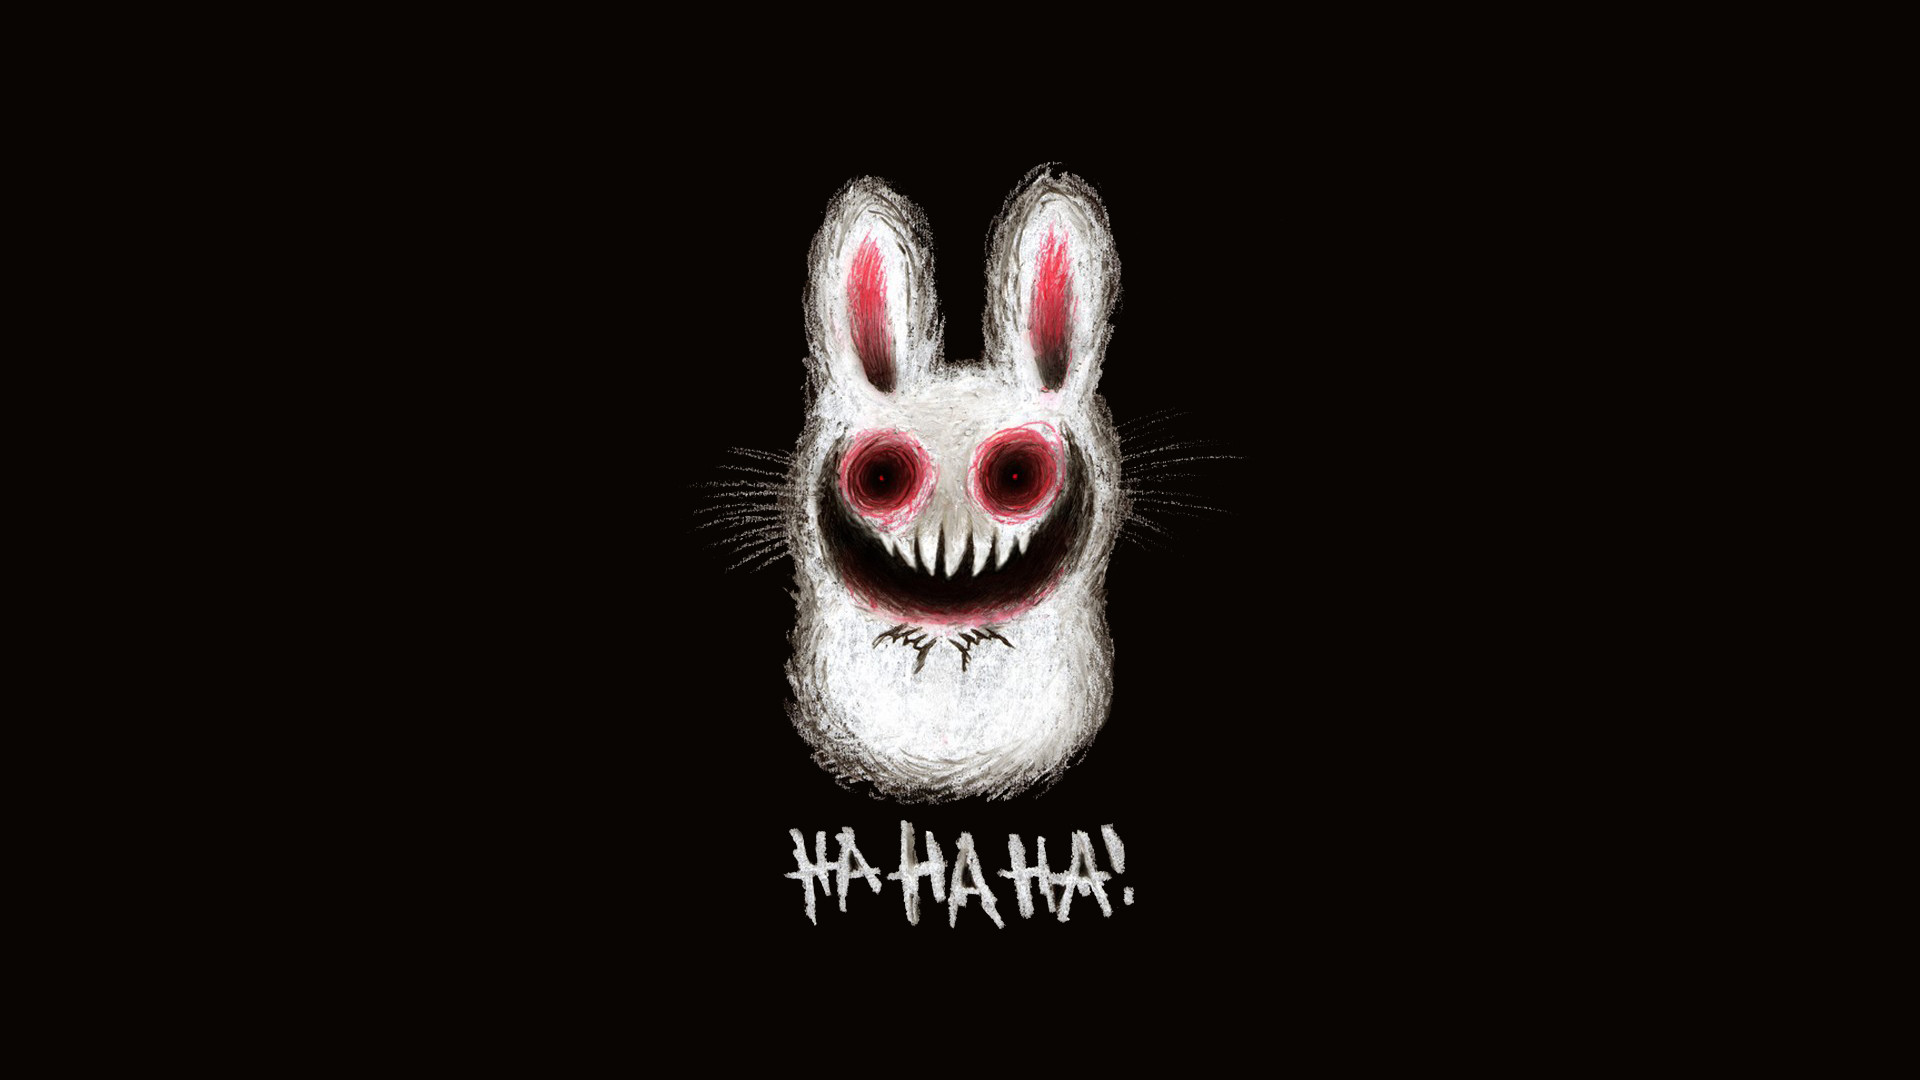 Creepy bunny wallpaper, cute adorable fluffy scary bunny rabbit .